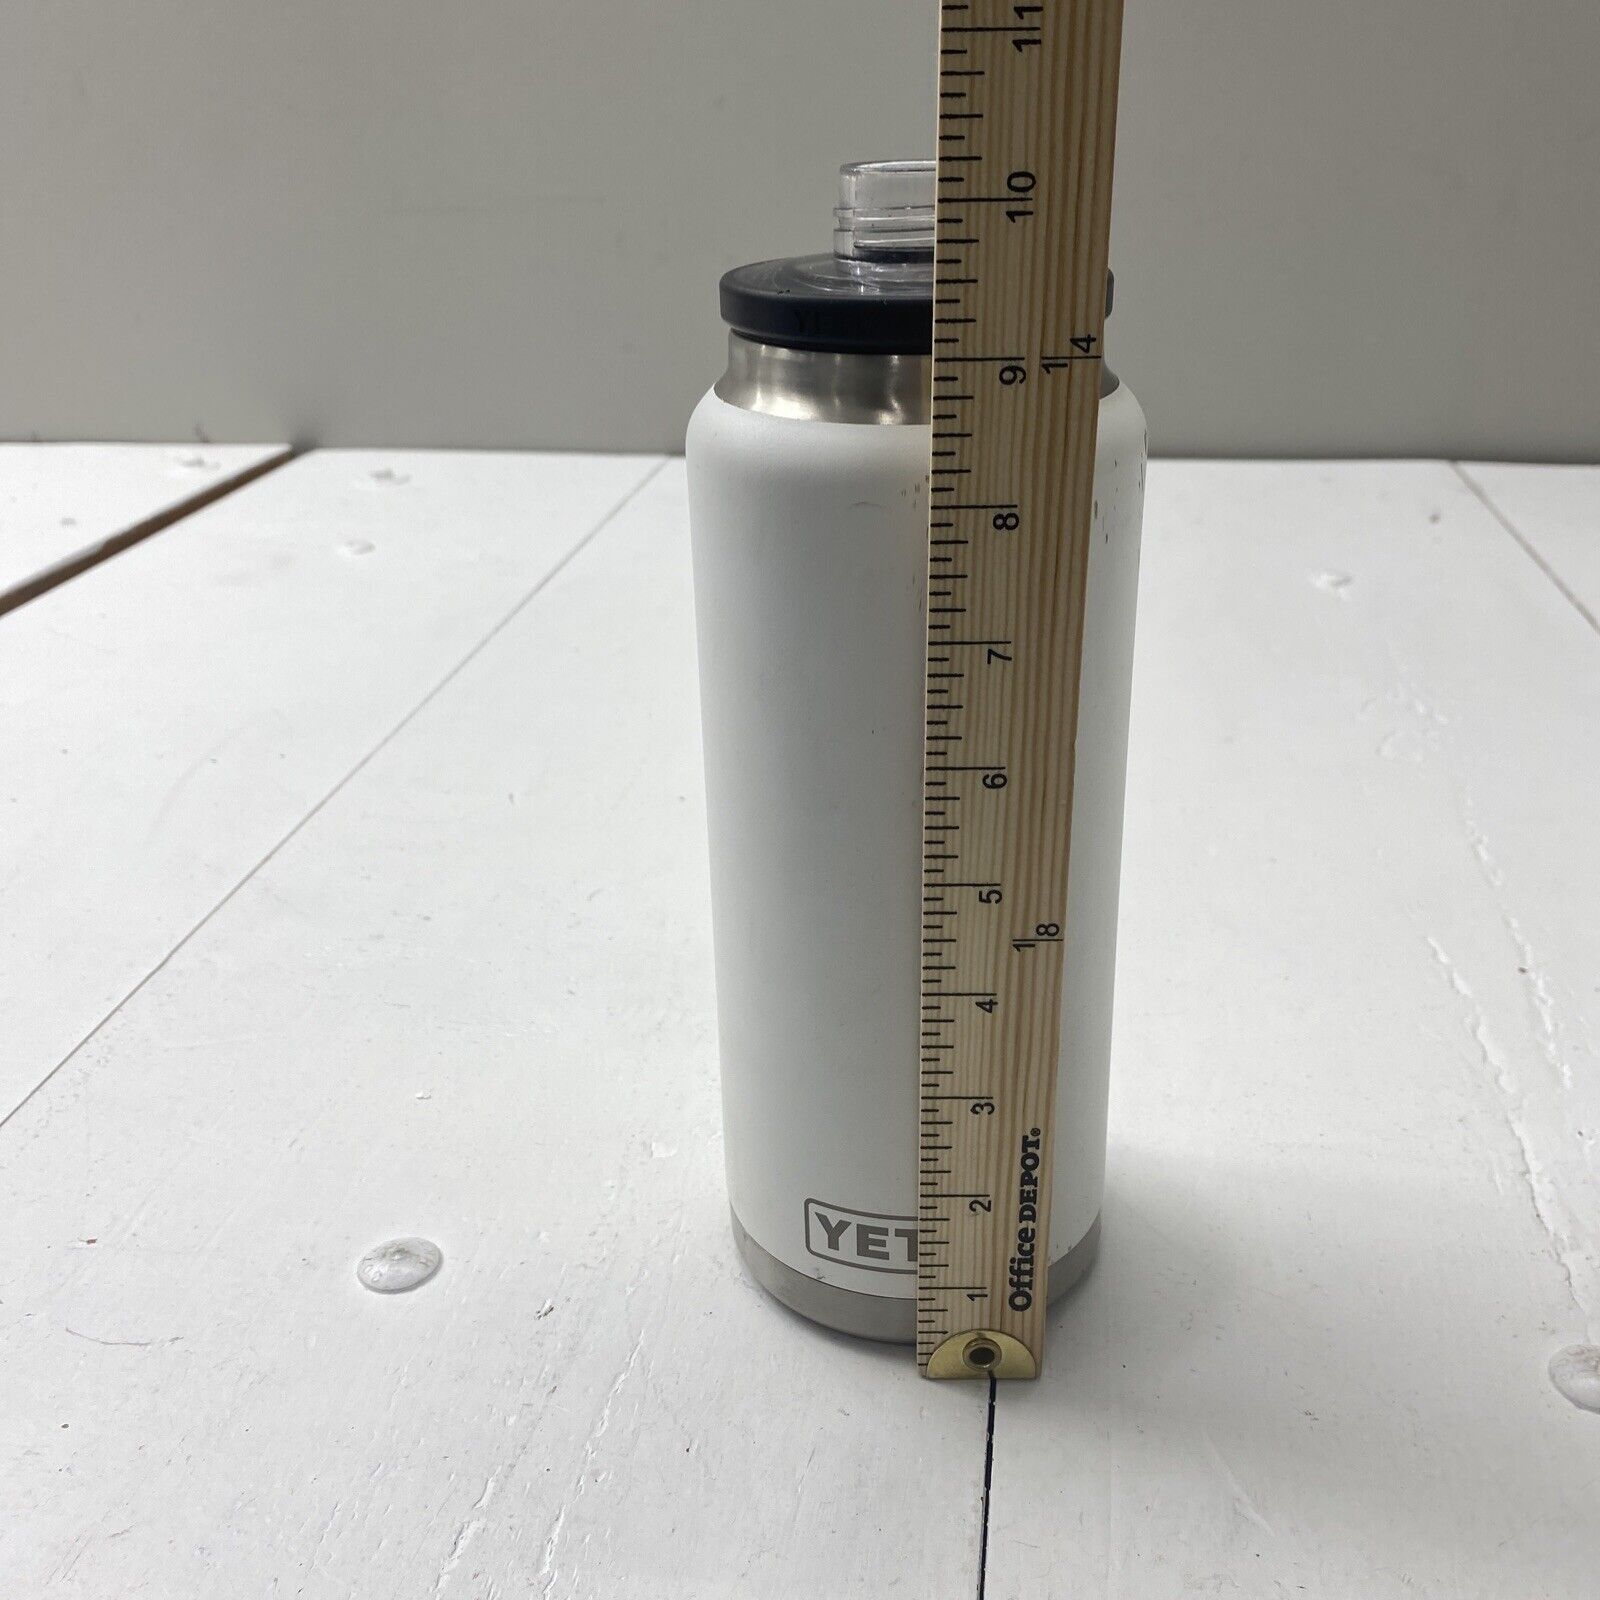 YETI Rambler 36-fl oz Stainless Steel Water Bottle in the Water